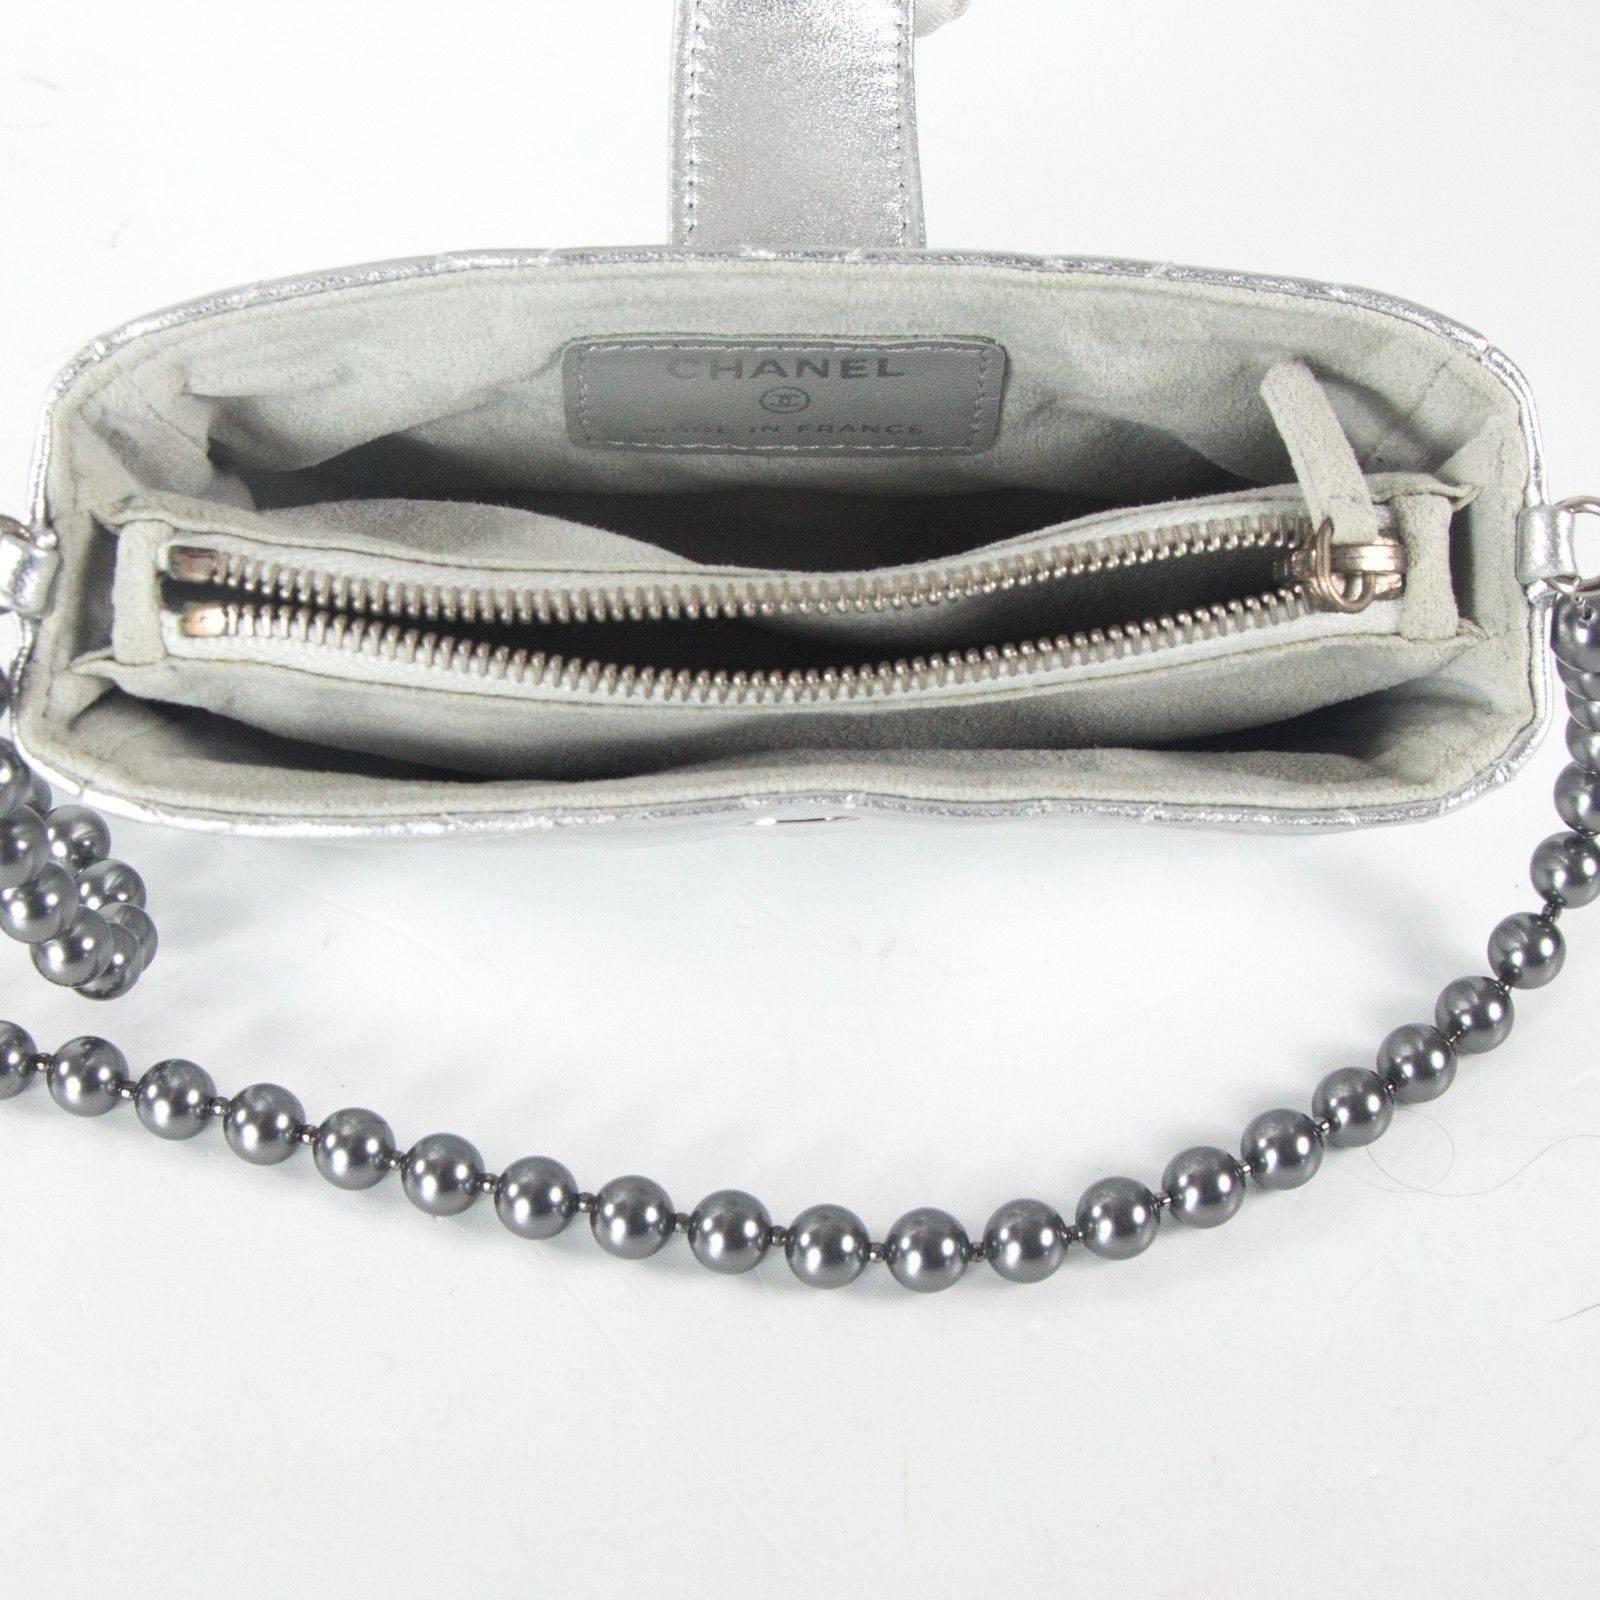 Chanel - New Pearl Crossbody Shoulder Bag - Silver Ocase CC Leather O Case Phone 3